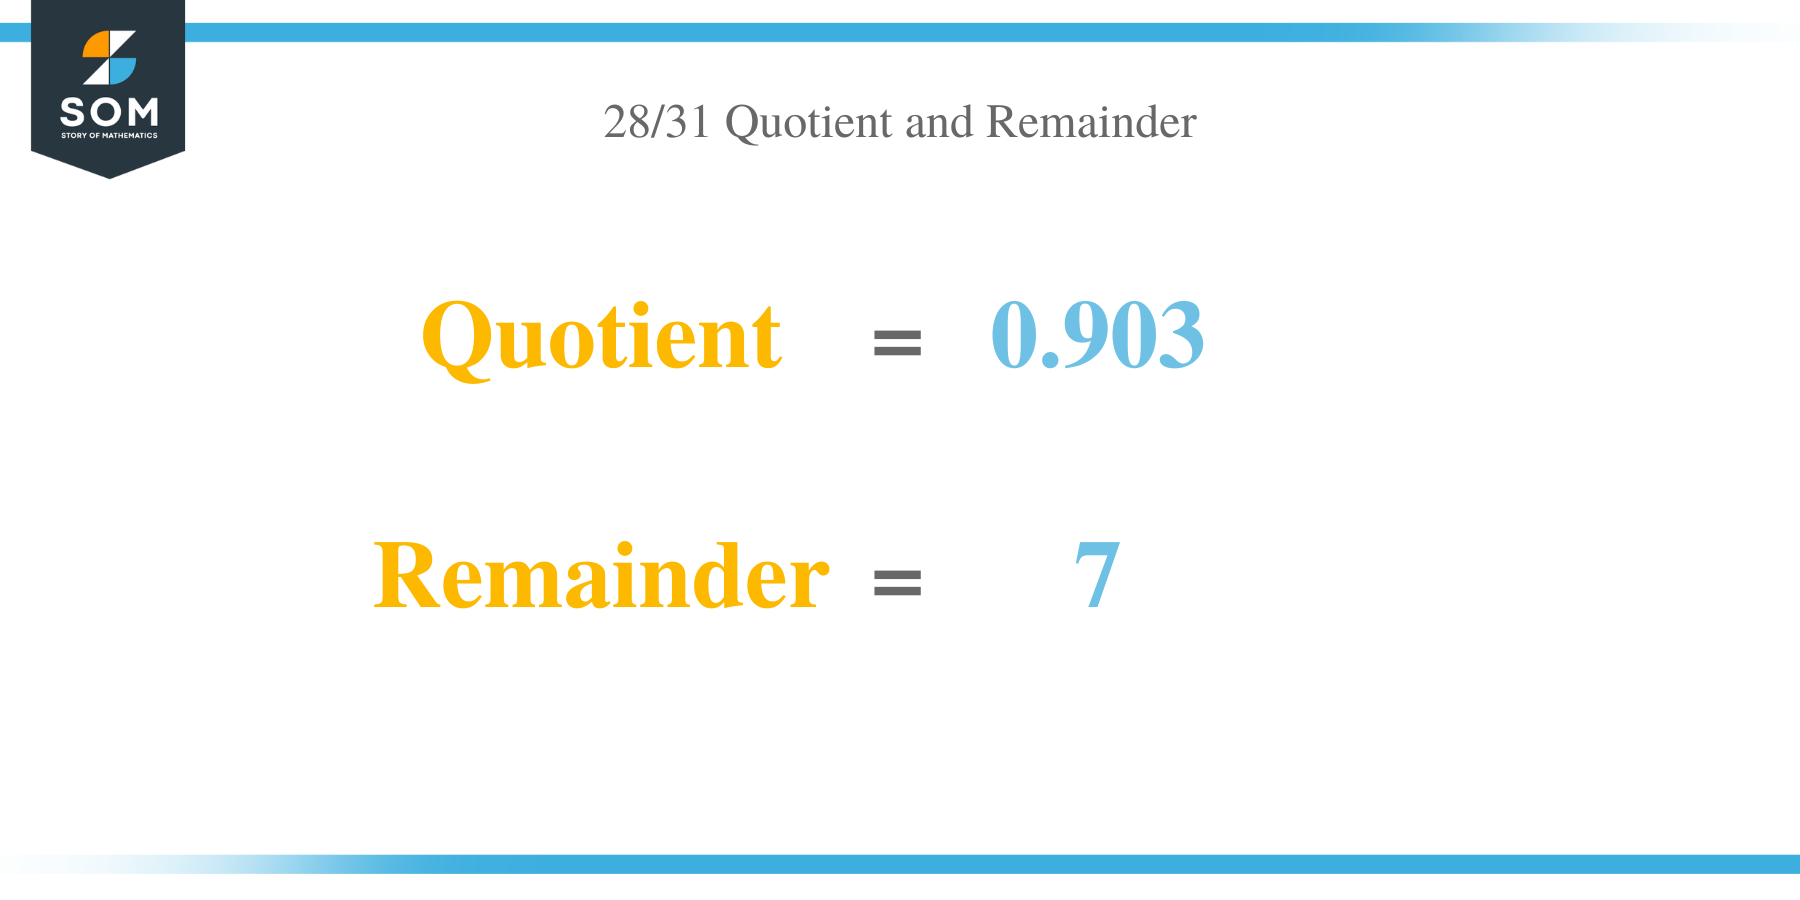 Quotient and Remainder of 28 per